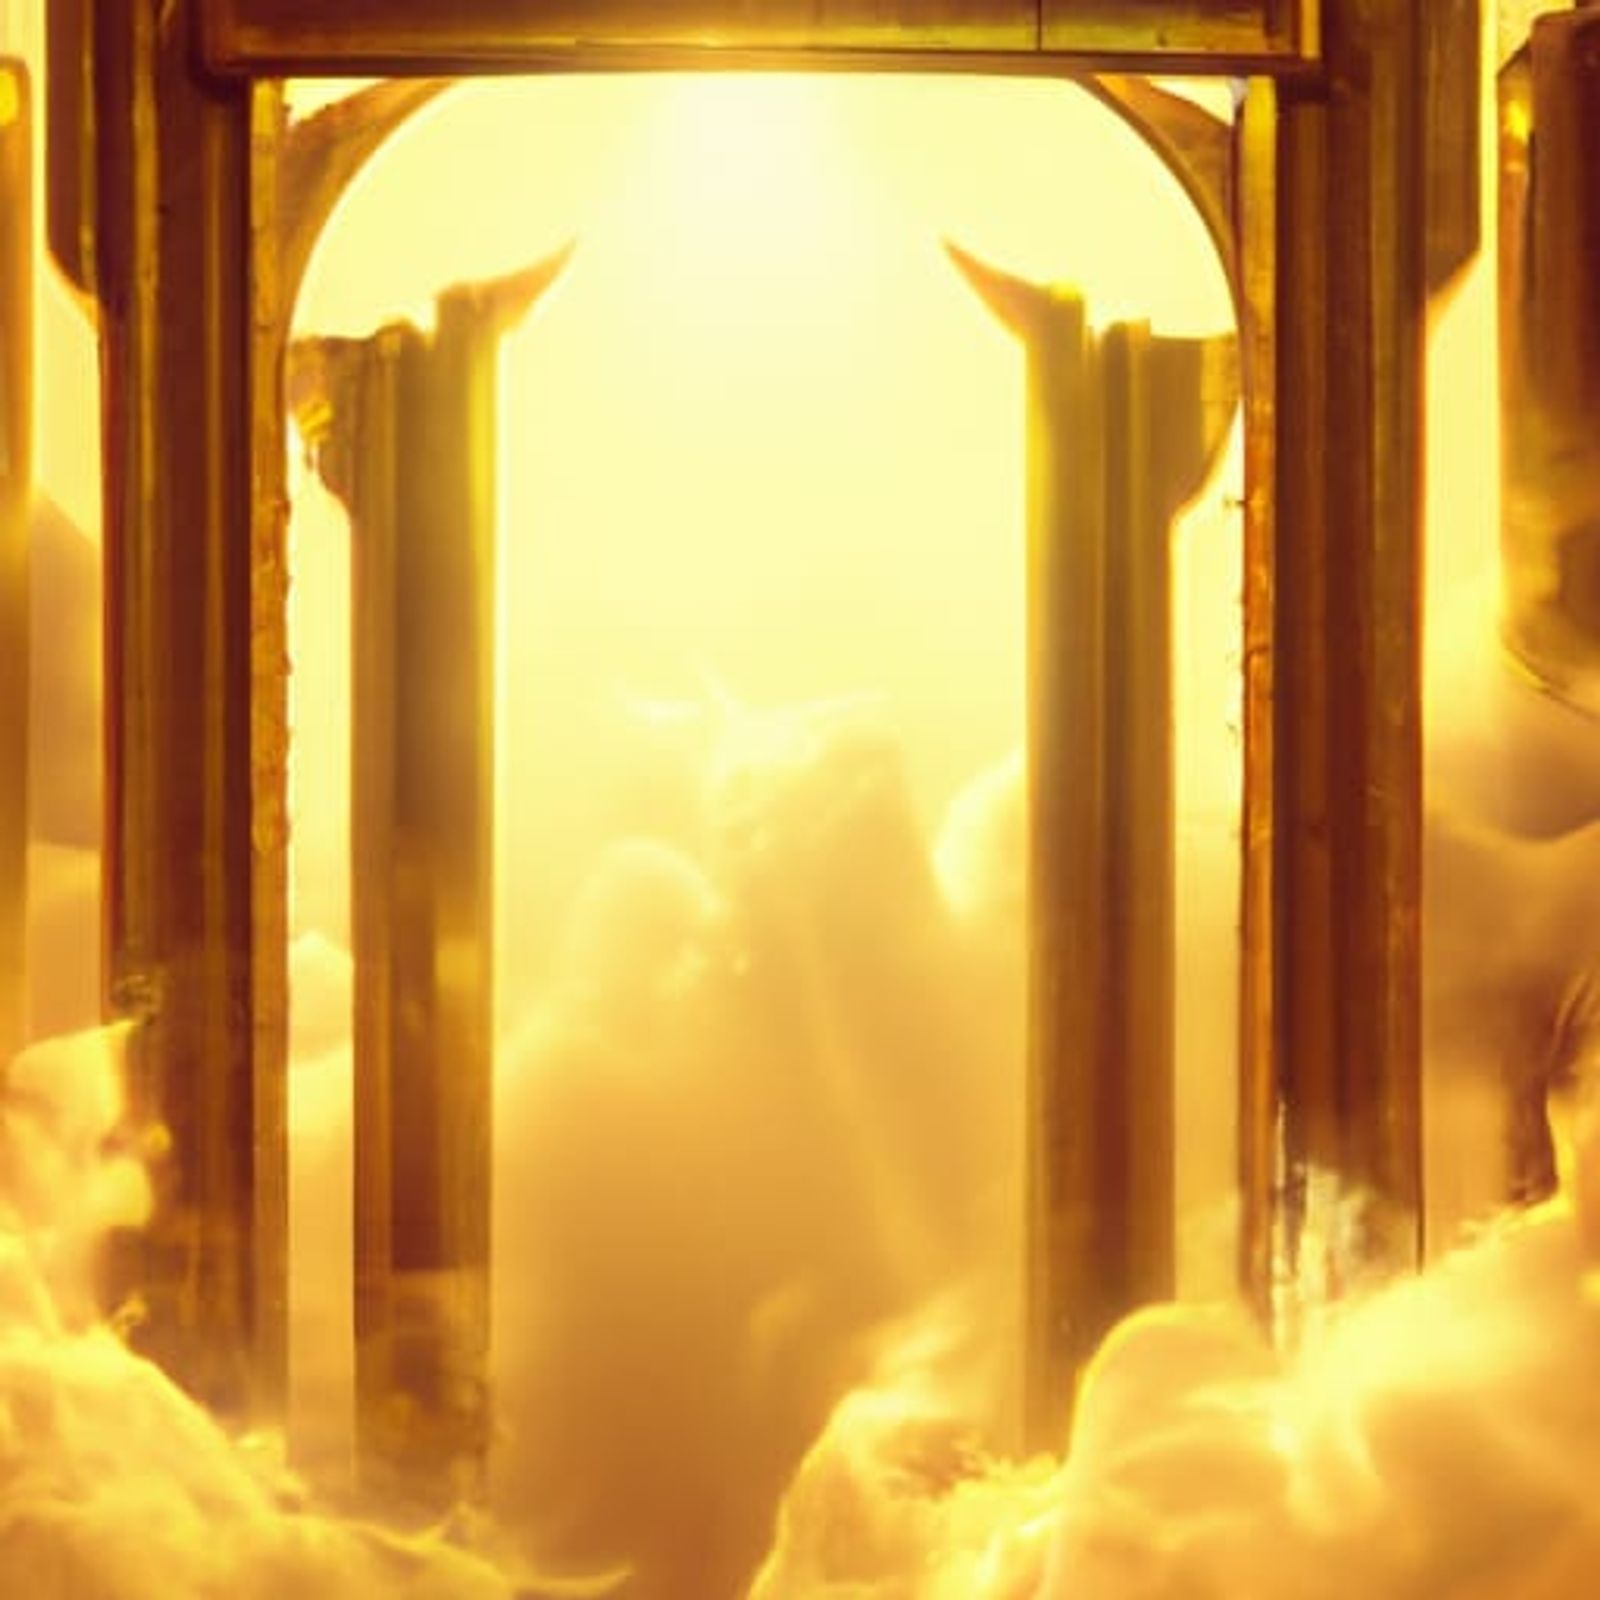 golden gates to heaven